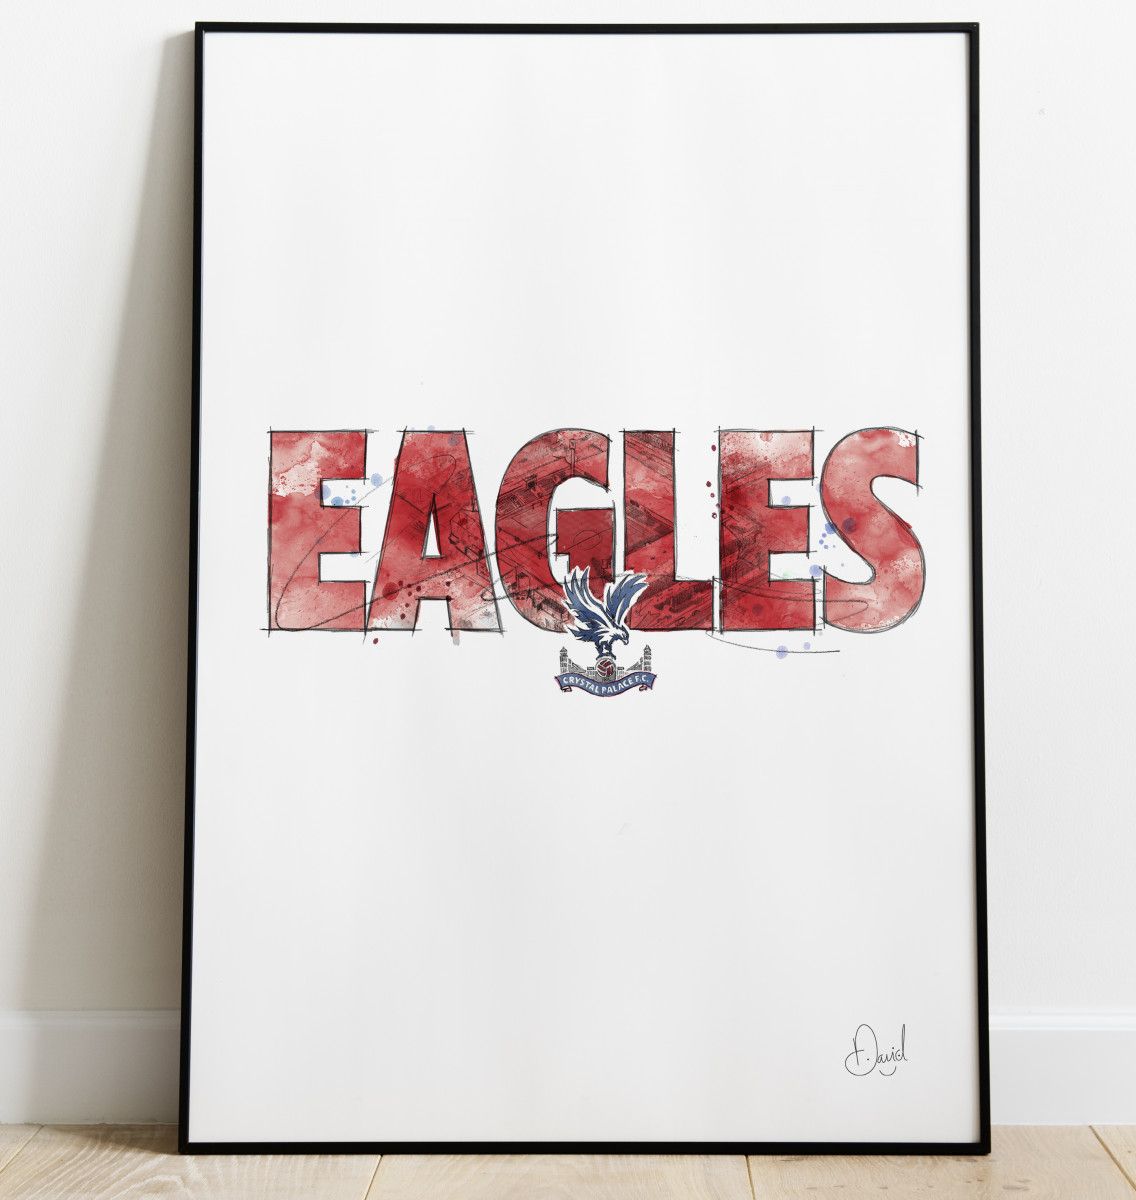 Crystal Palace - Eagles art print